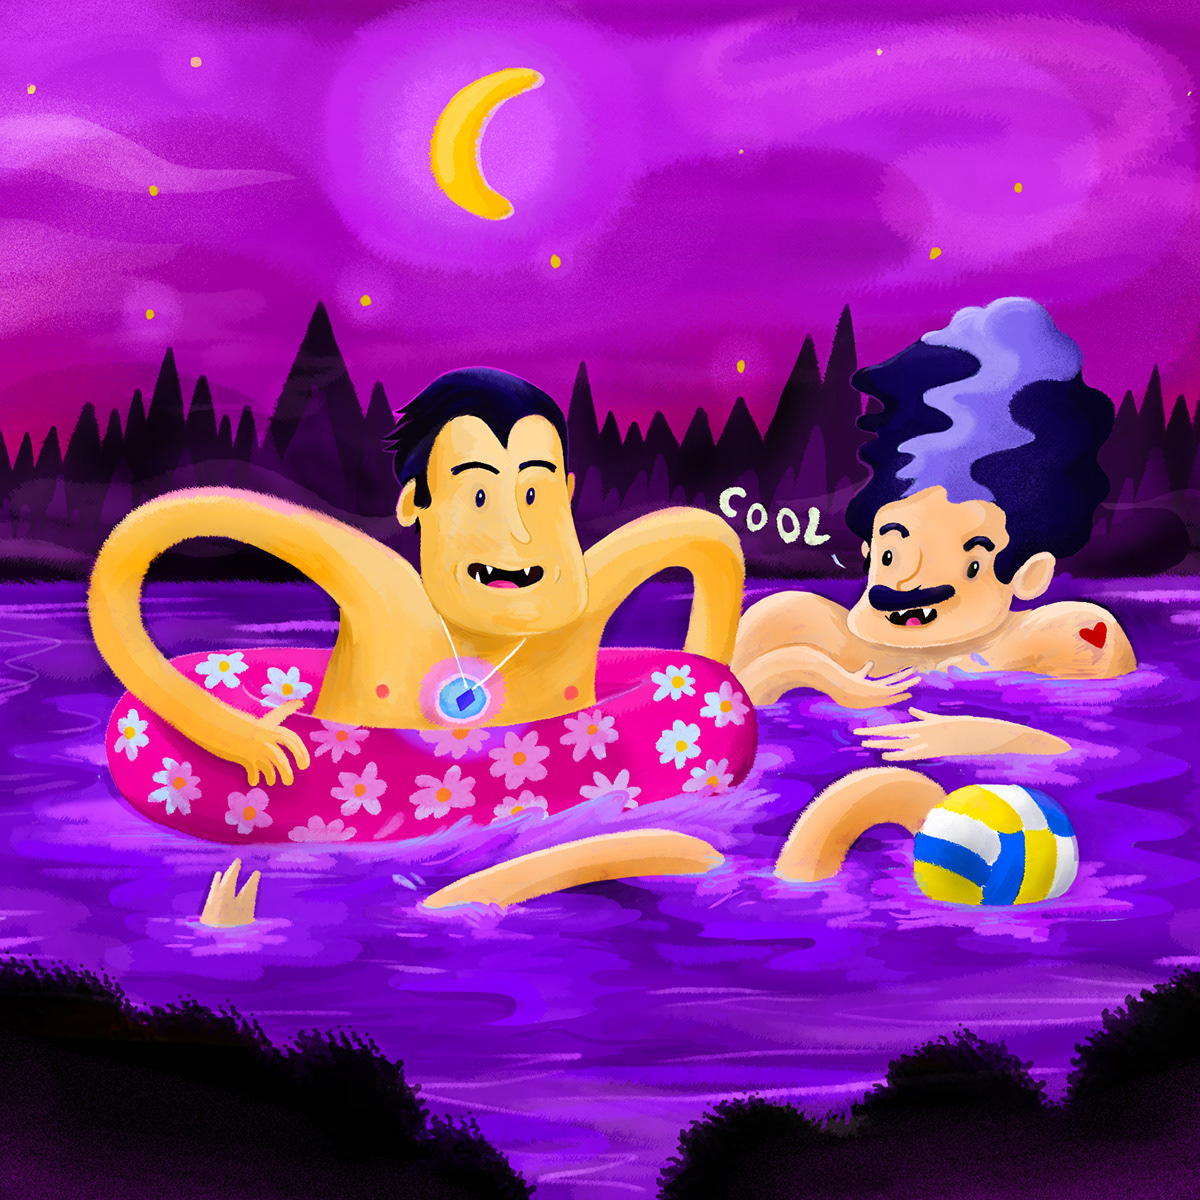 vampire dracula digital illustration purple forest LGBT gay cool horror Halloween